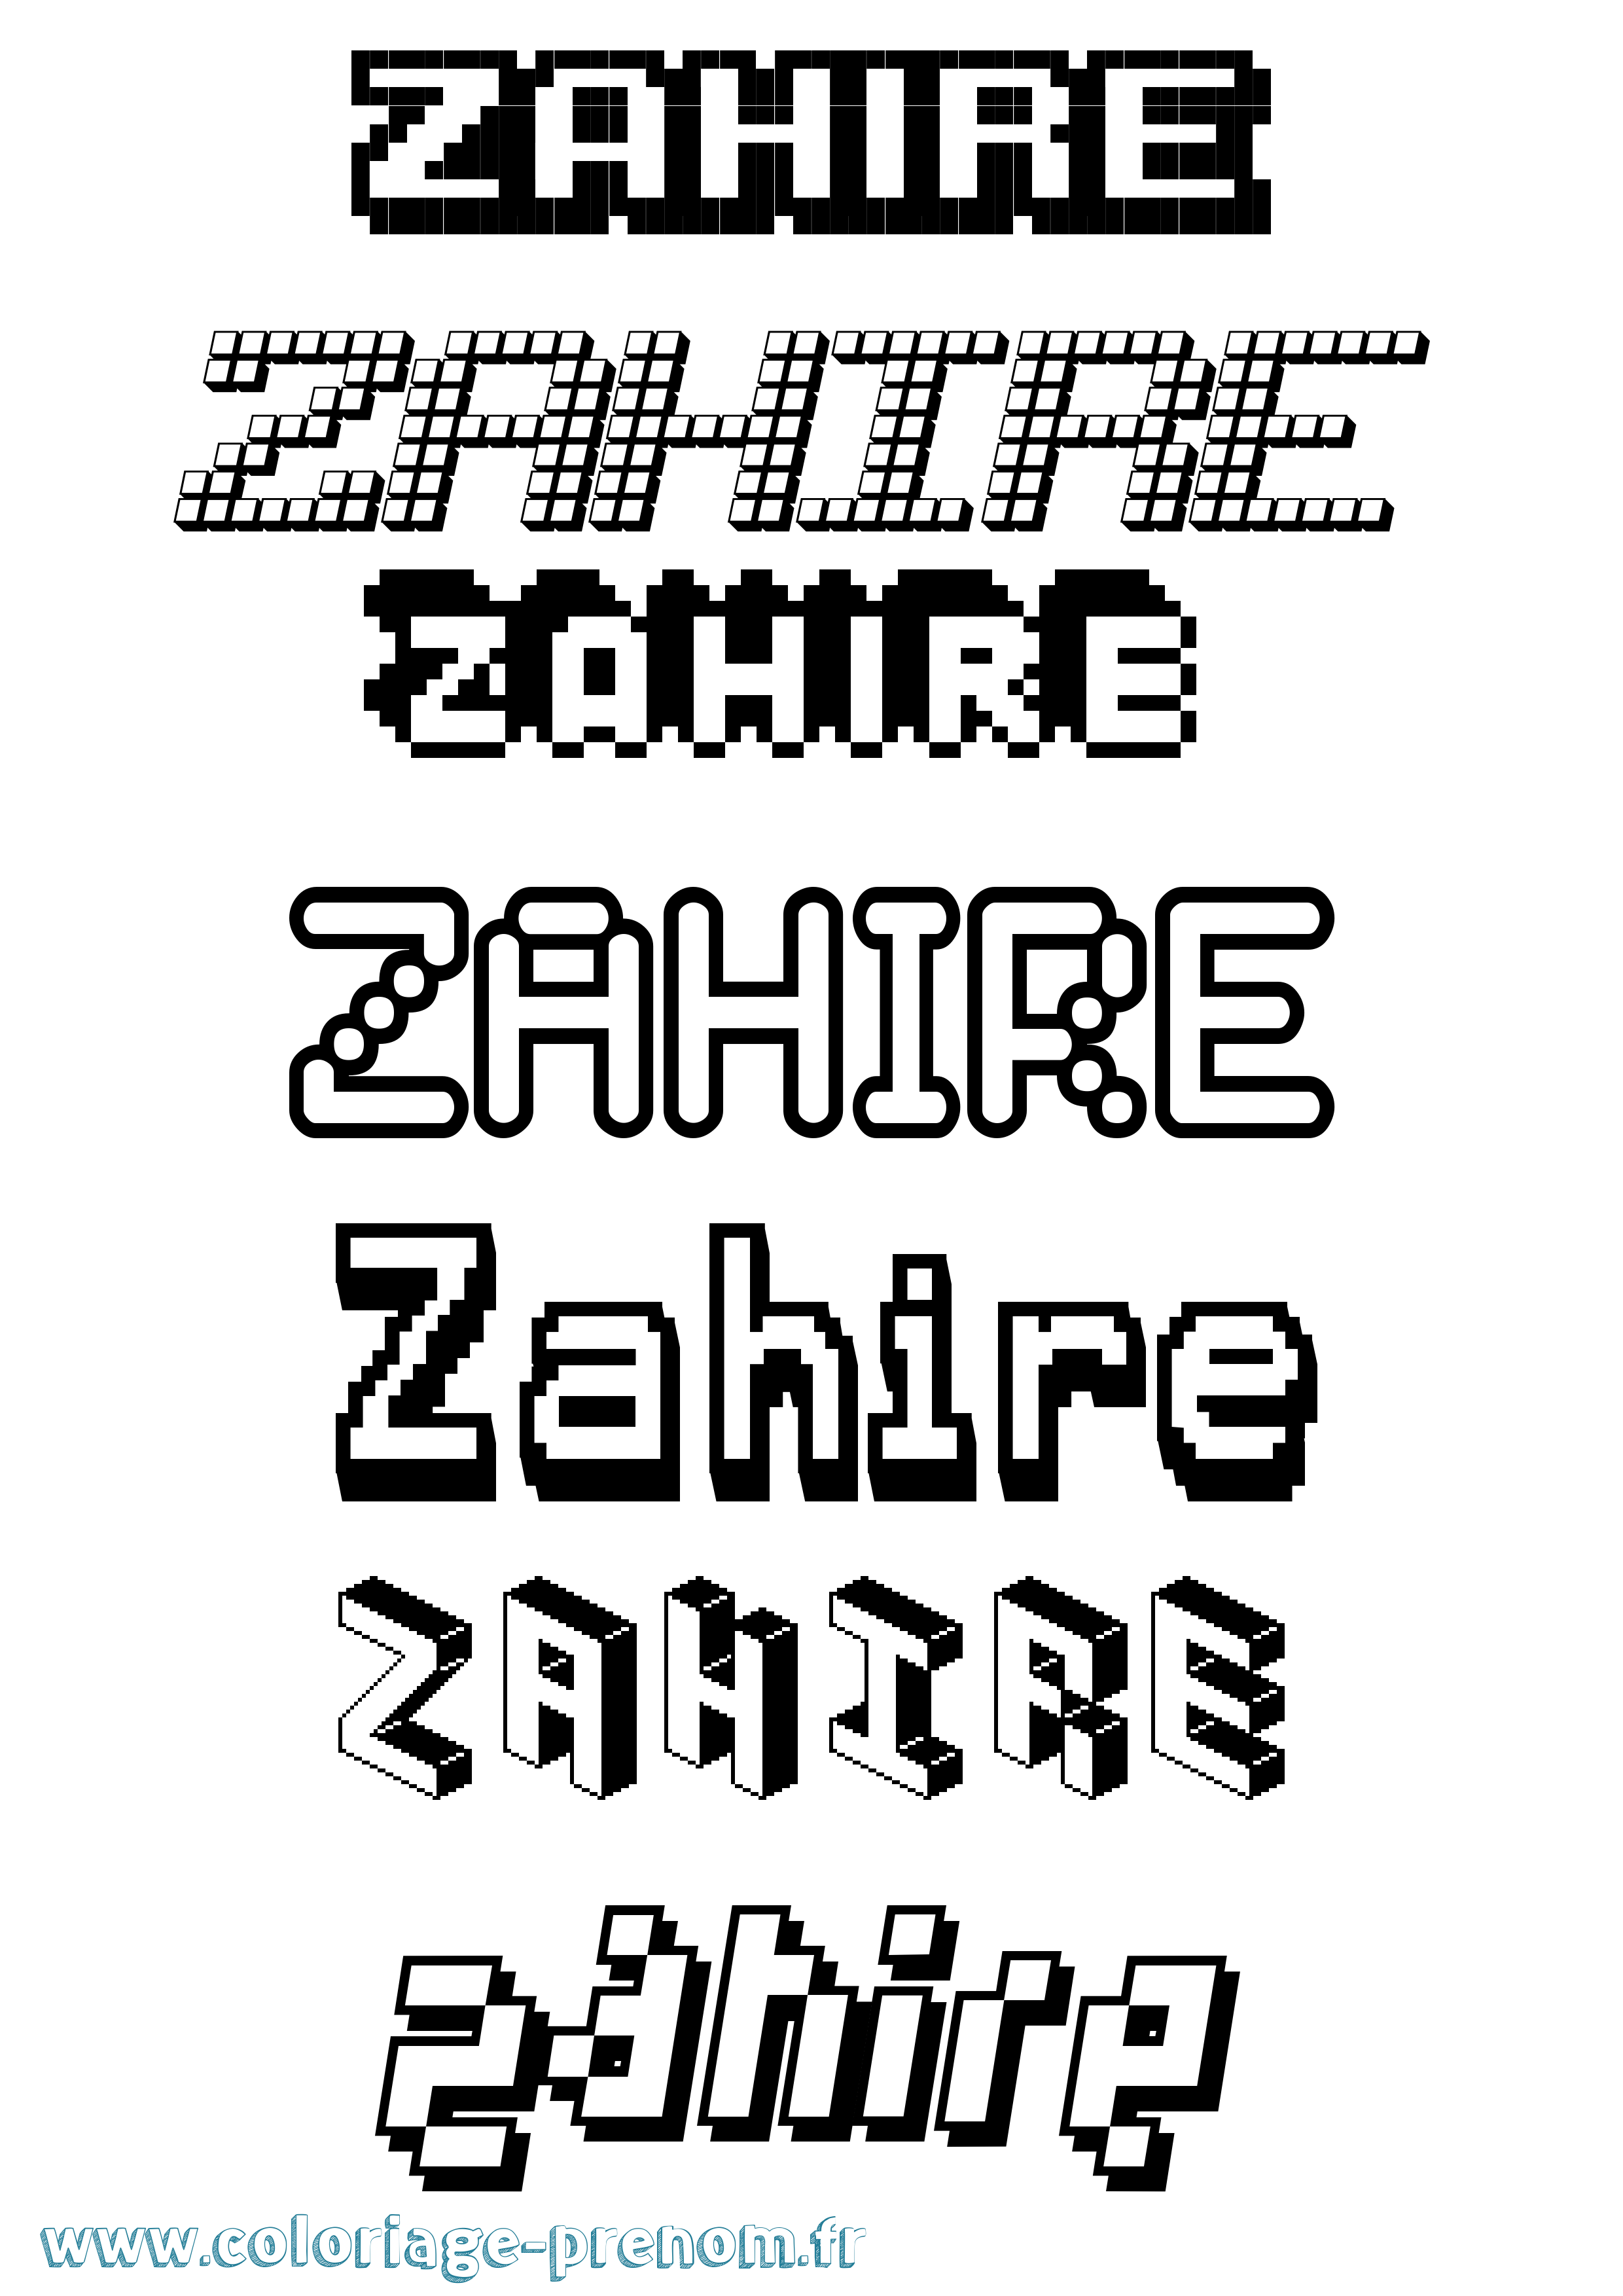 Coloriage prénom Zahire Pixel